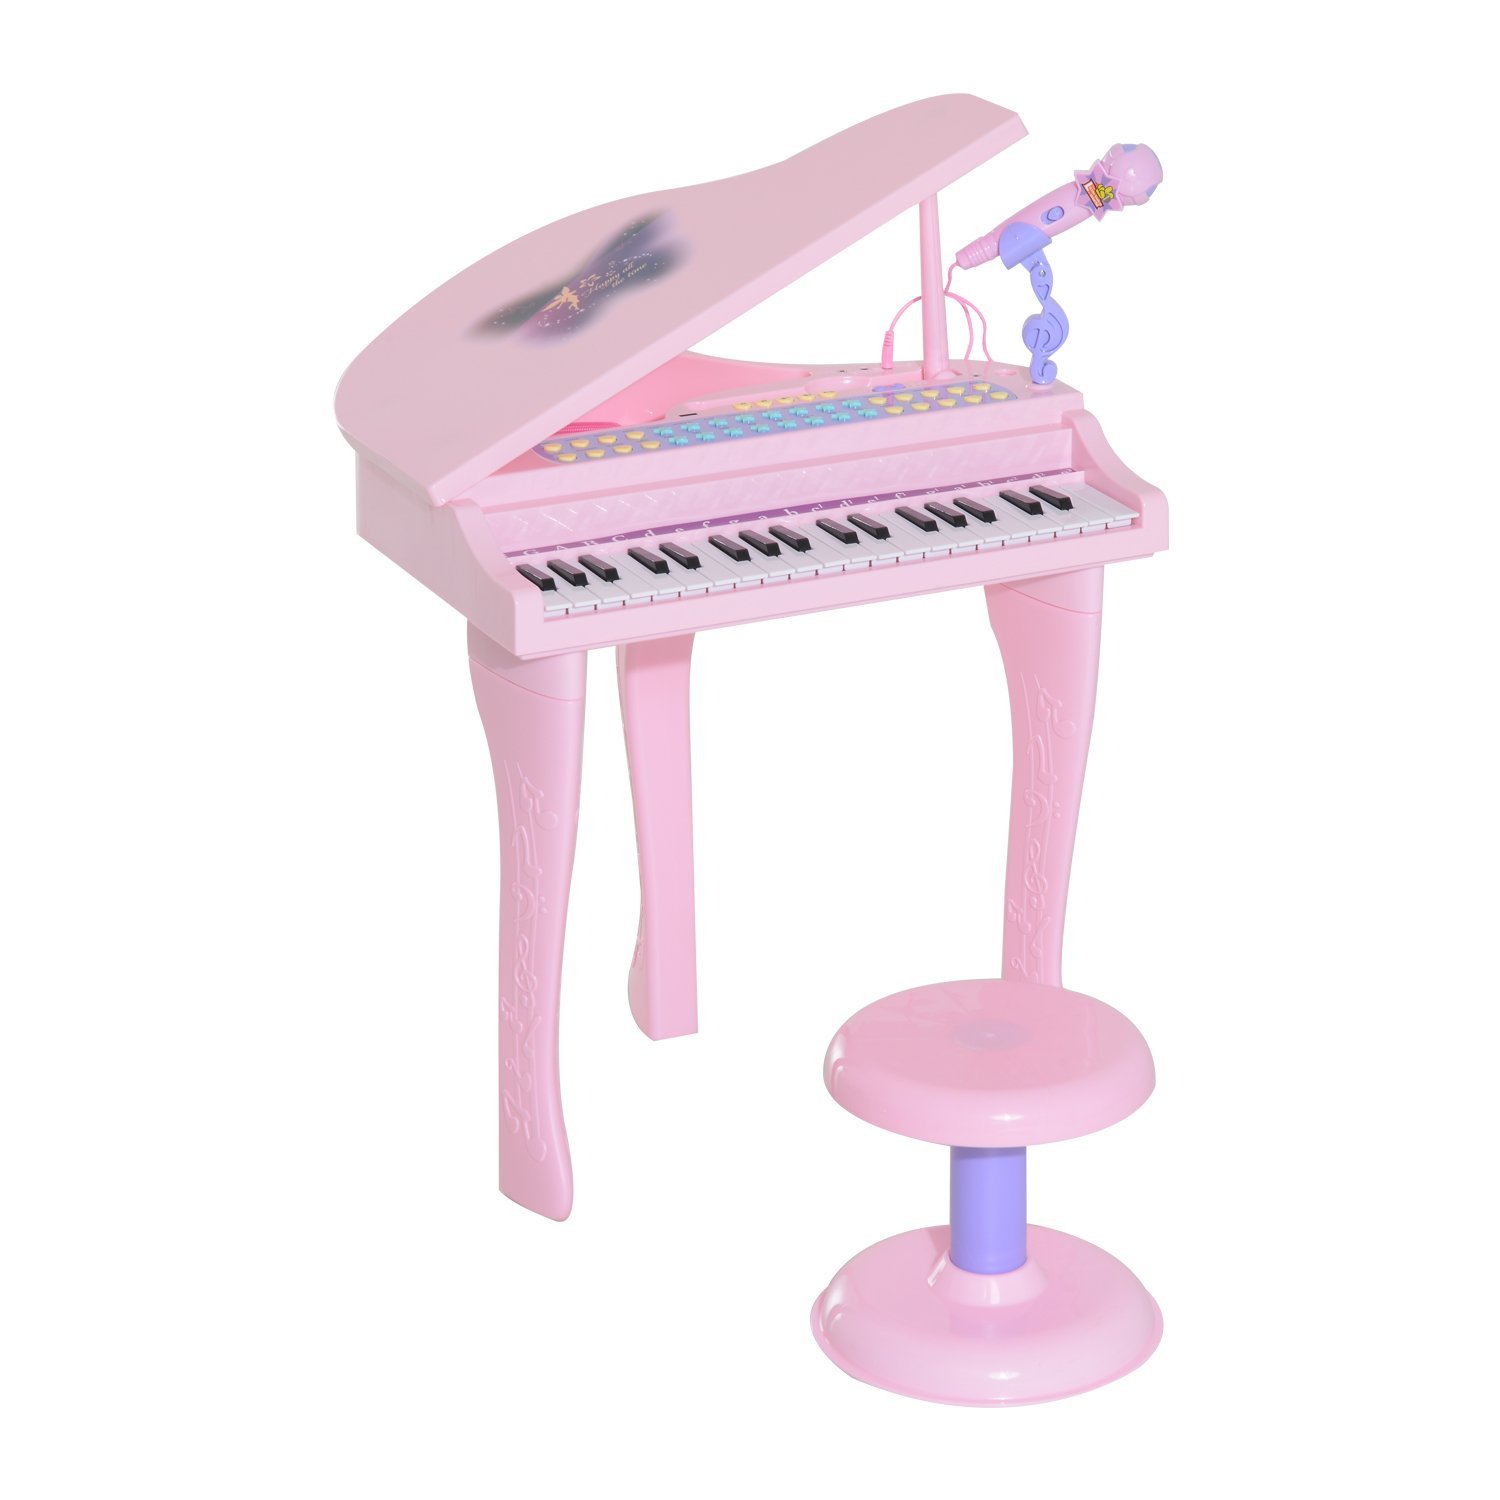 Piano Kinderpiano Kinder Keyboard Spielzeug Klavier Musikinstrument Mikrofon HK 